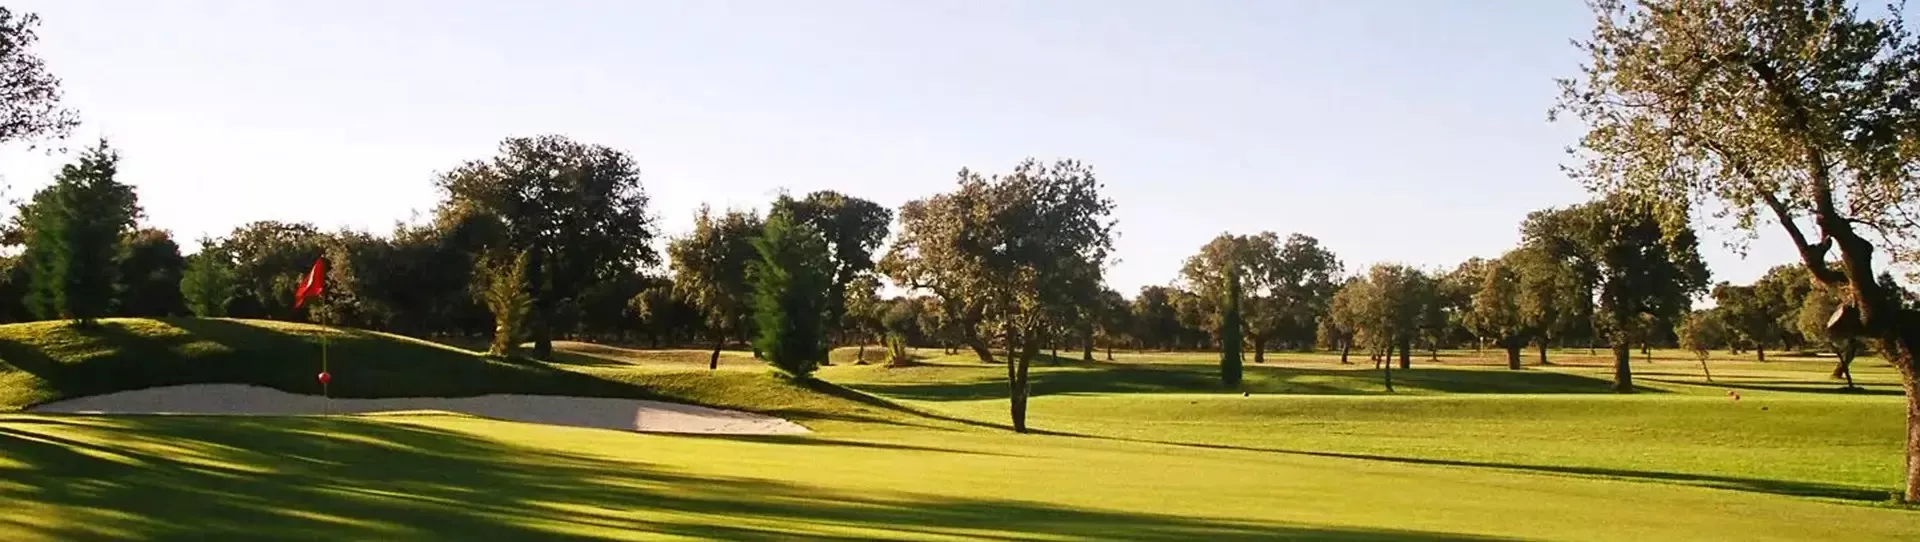 Spain golf courses - La Valmuza Golf Course - Photo 1